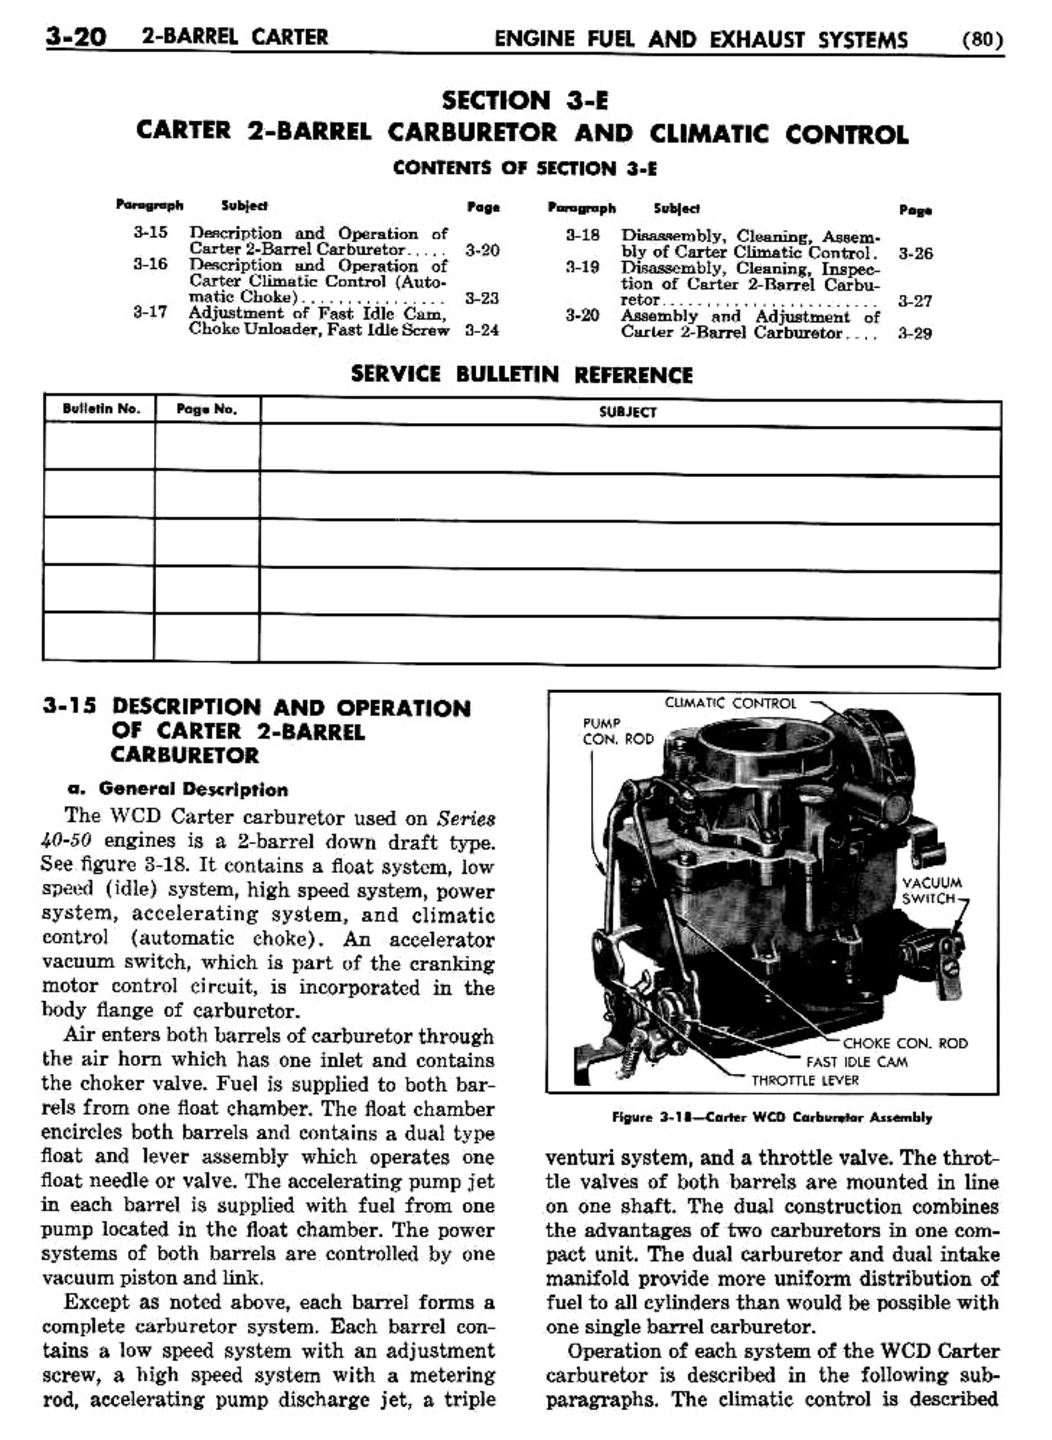 n_04 1954 Buick Shop Manual - Engine Fuel & Exhaust-020-020.jpg